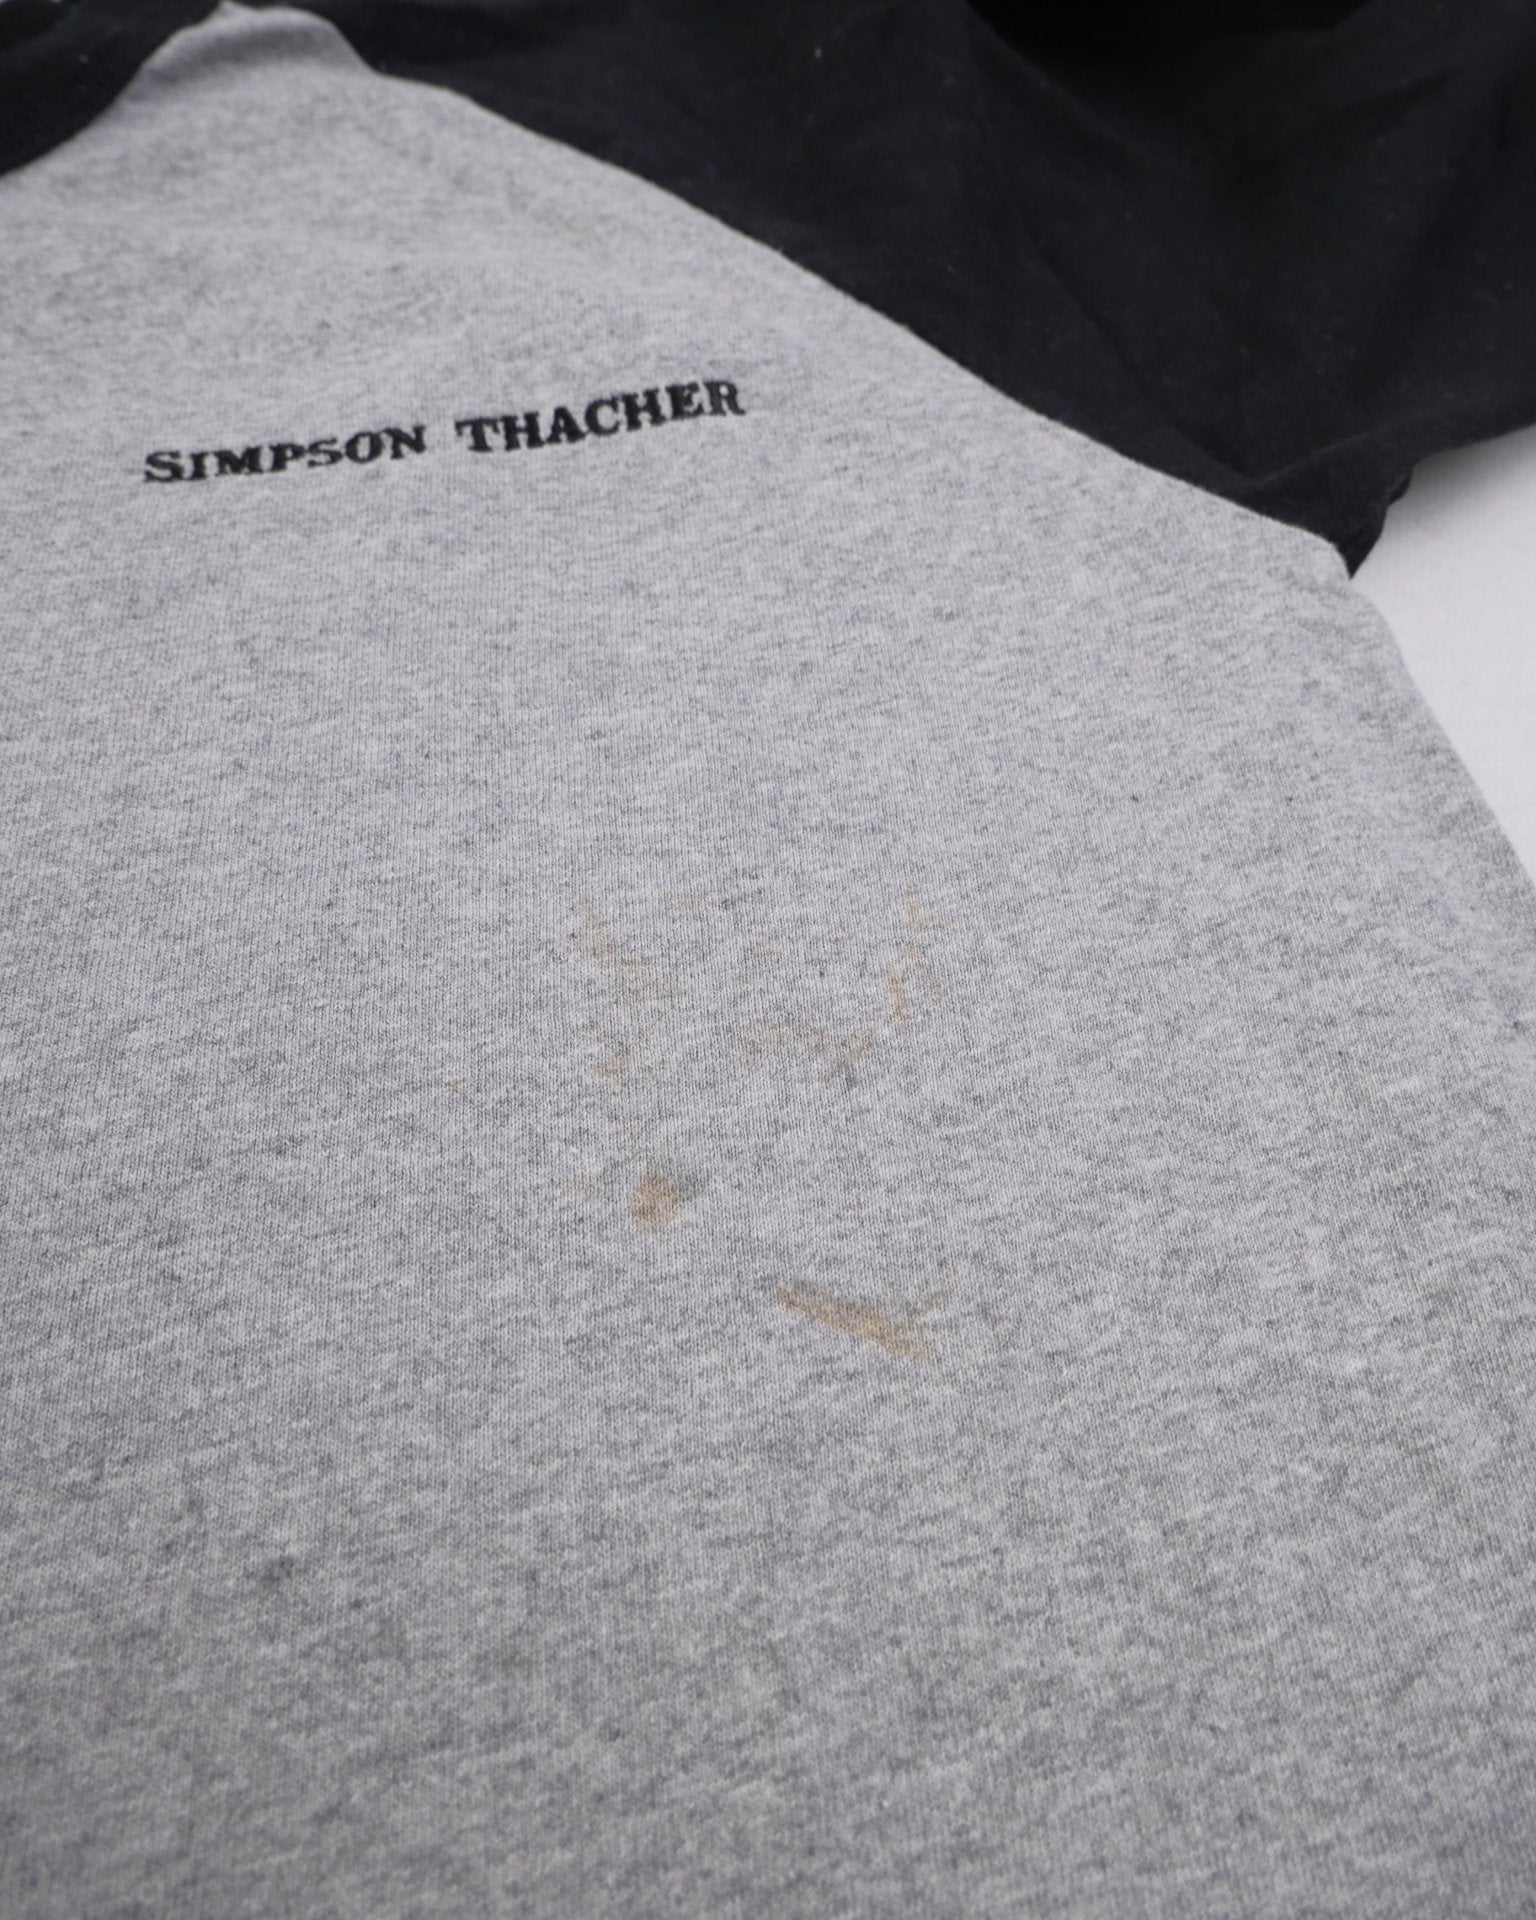 Champion Simpson Thacher embroidered Logo two toned Polo Shirt - Peeces